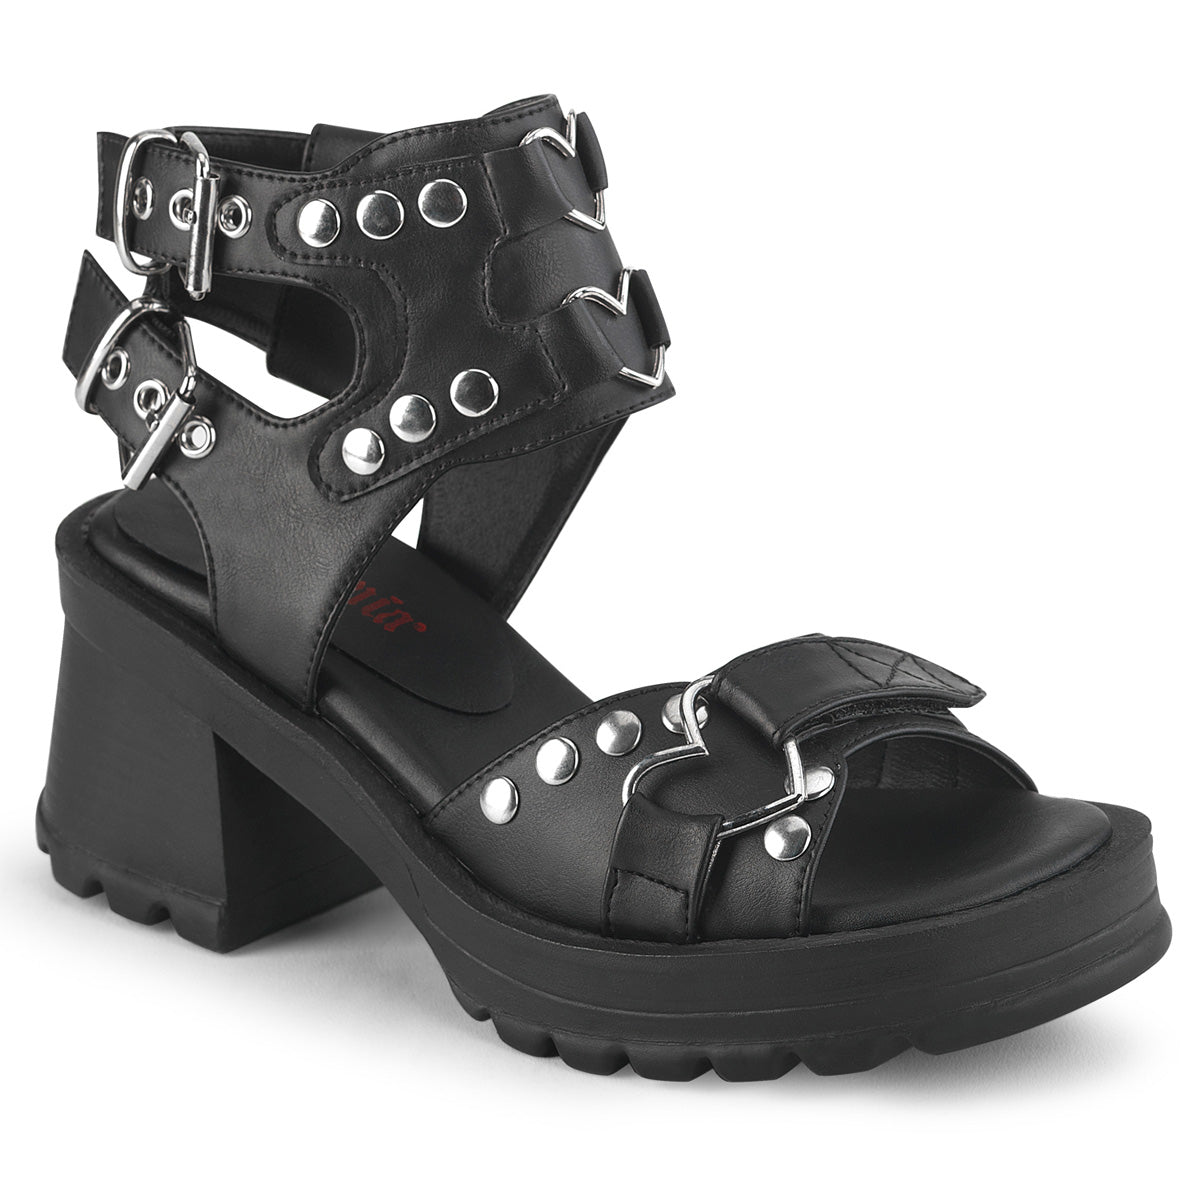 BRATTY-07 Alternative Footwear Demonia Women's Sandals Blk Vegan Leather